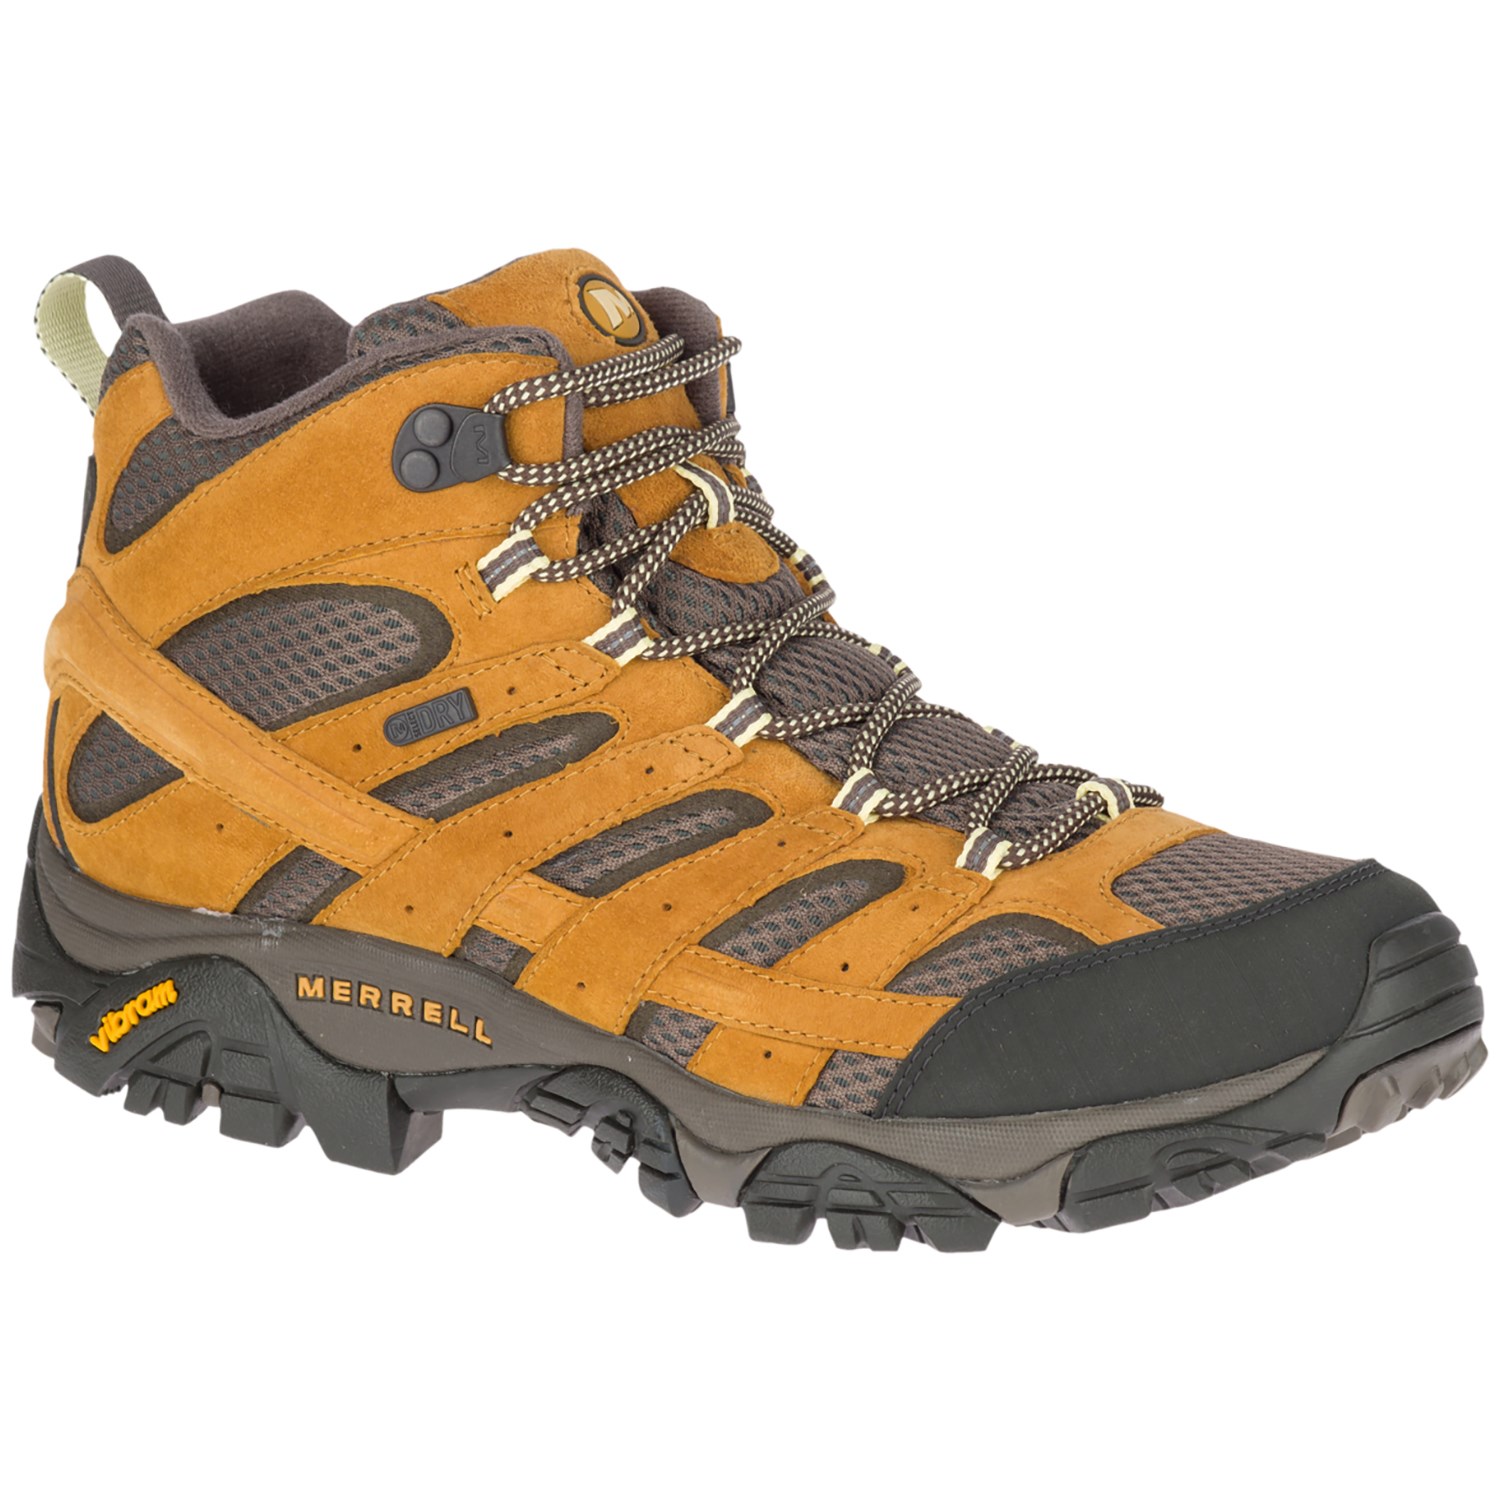 Moab 2 Mid Waterproof Hiking Boots | evo